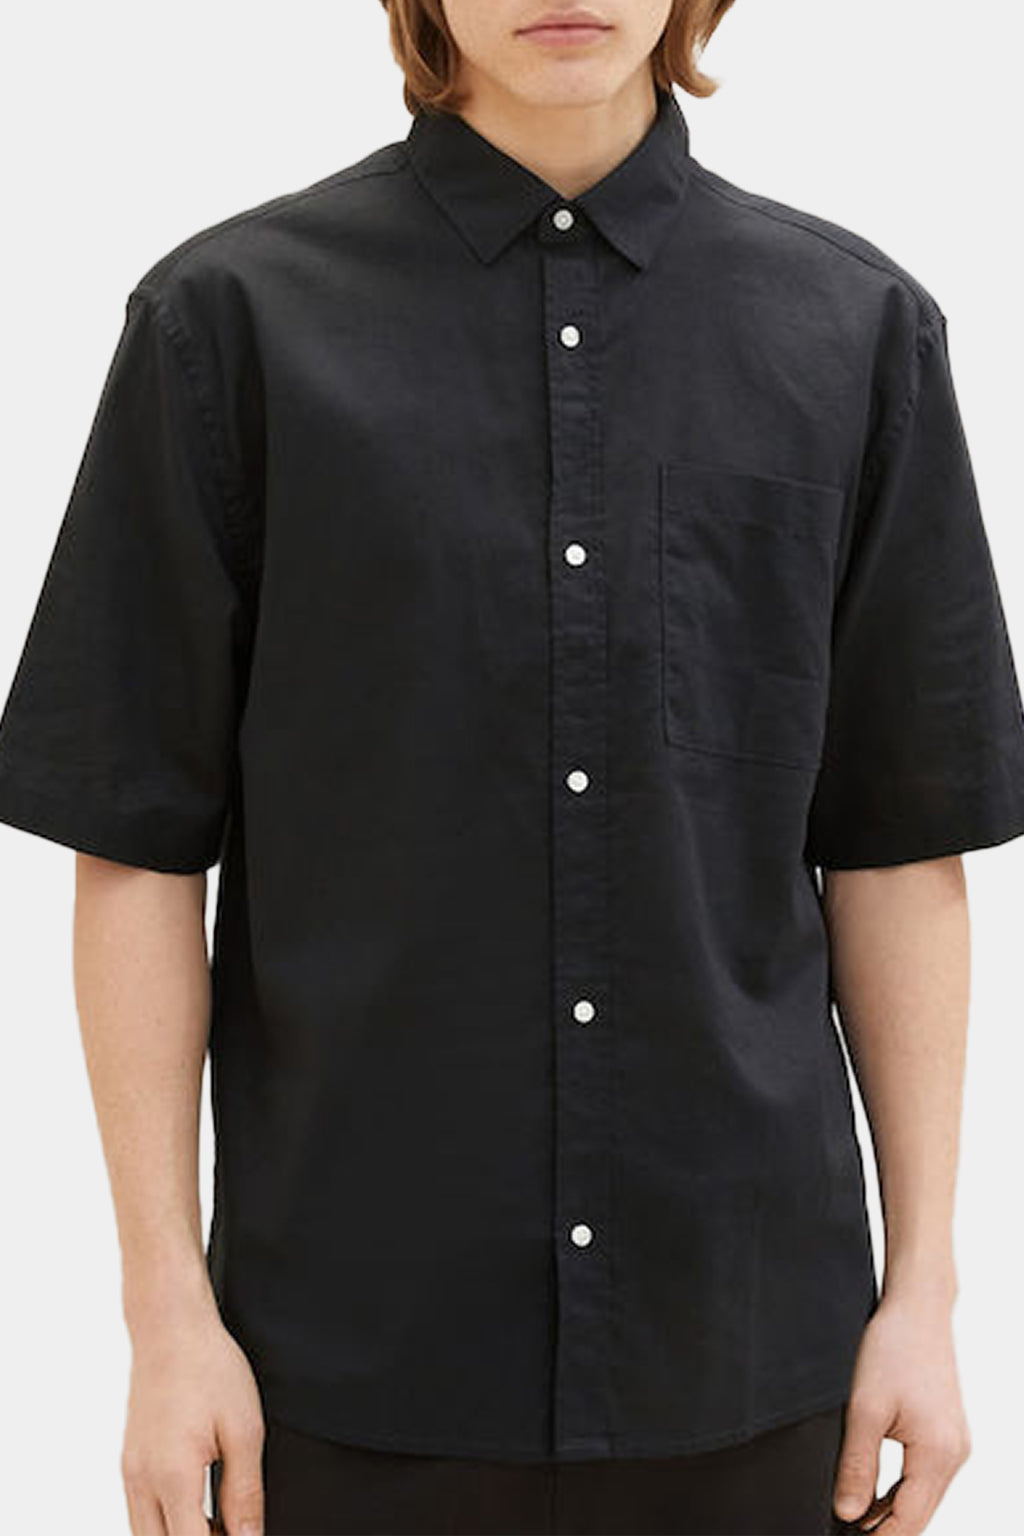 Tom Tailor - Men's Shirt With Short Sleeves Black